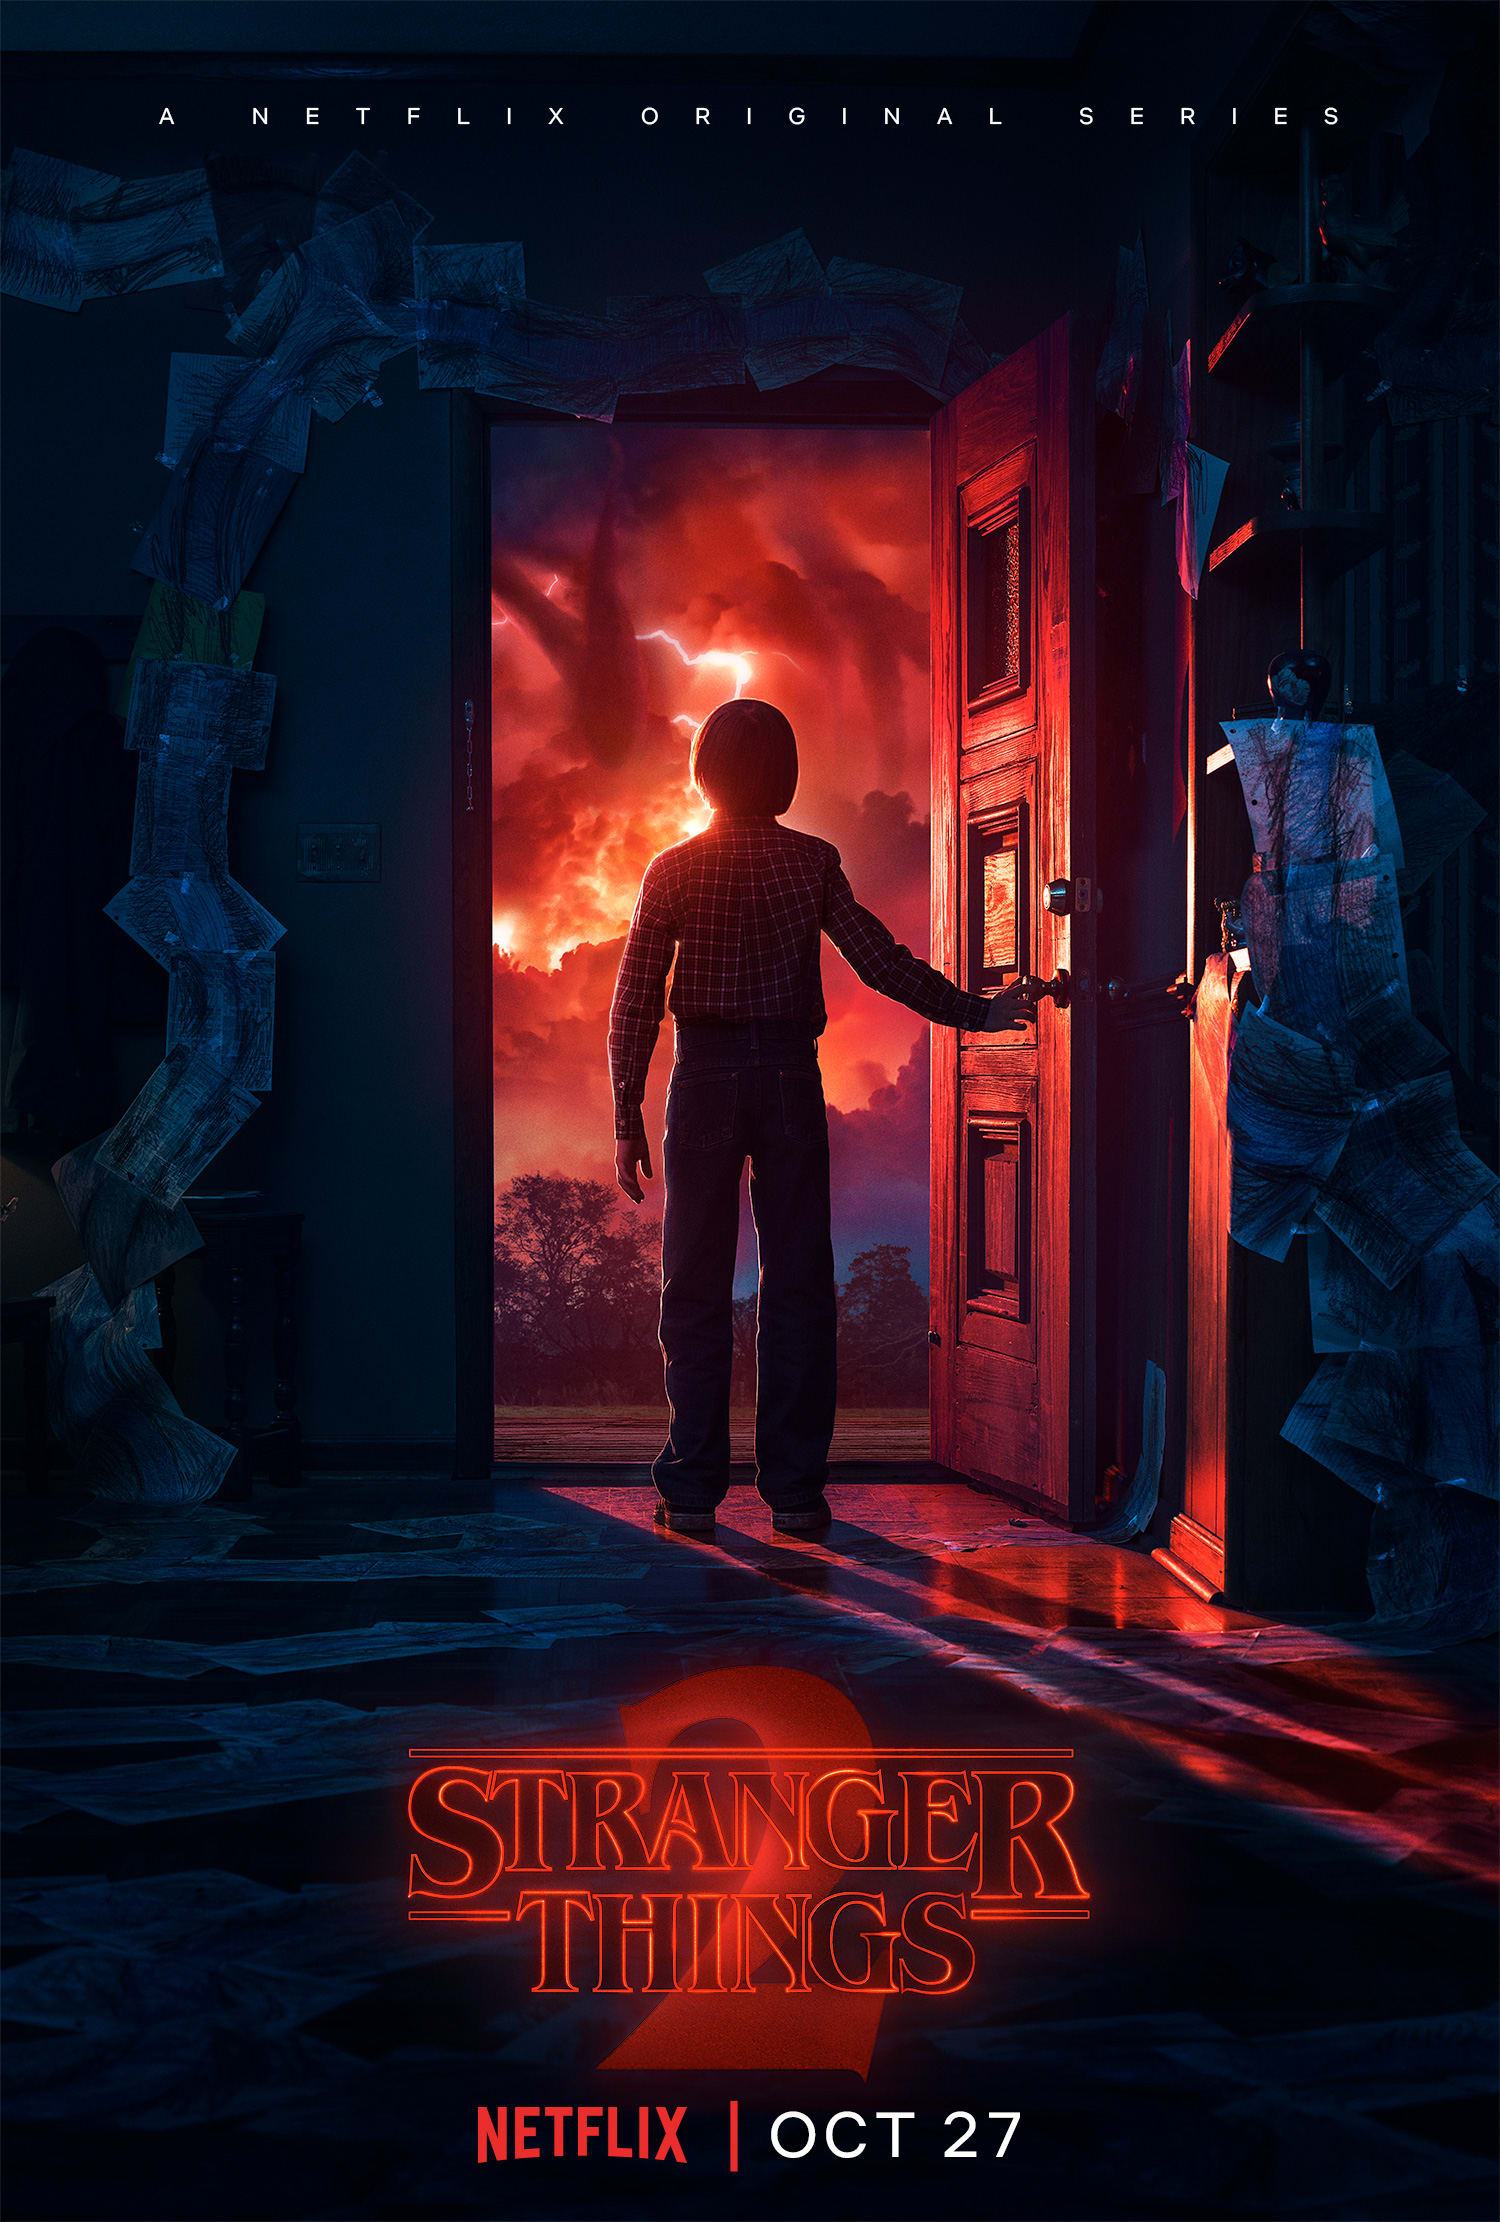 Stranger Things 2: Main poster and key art (Photos)